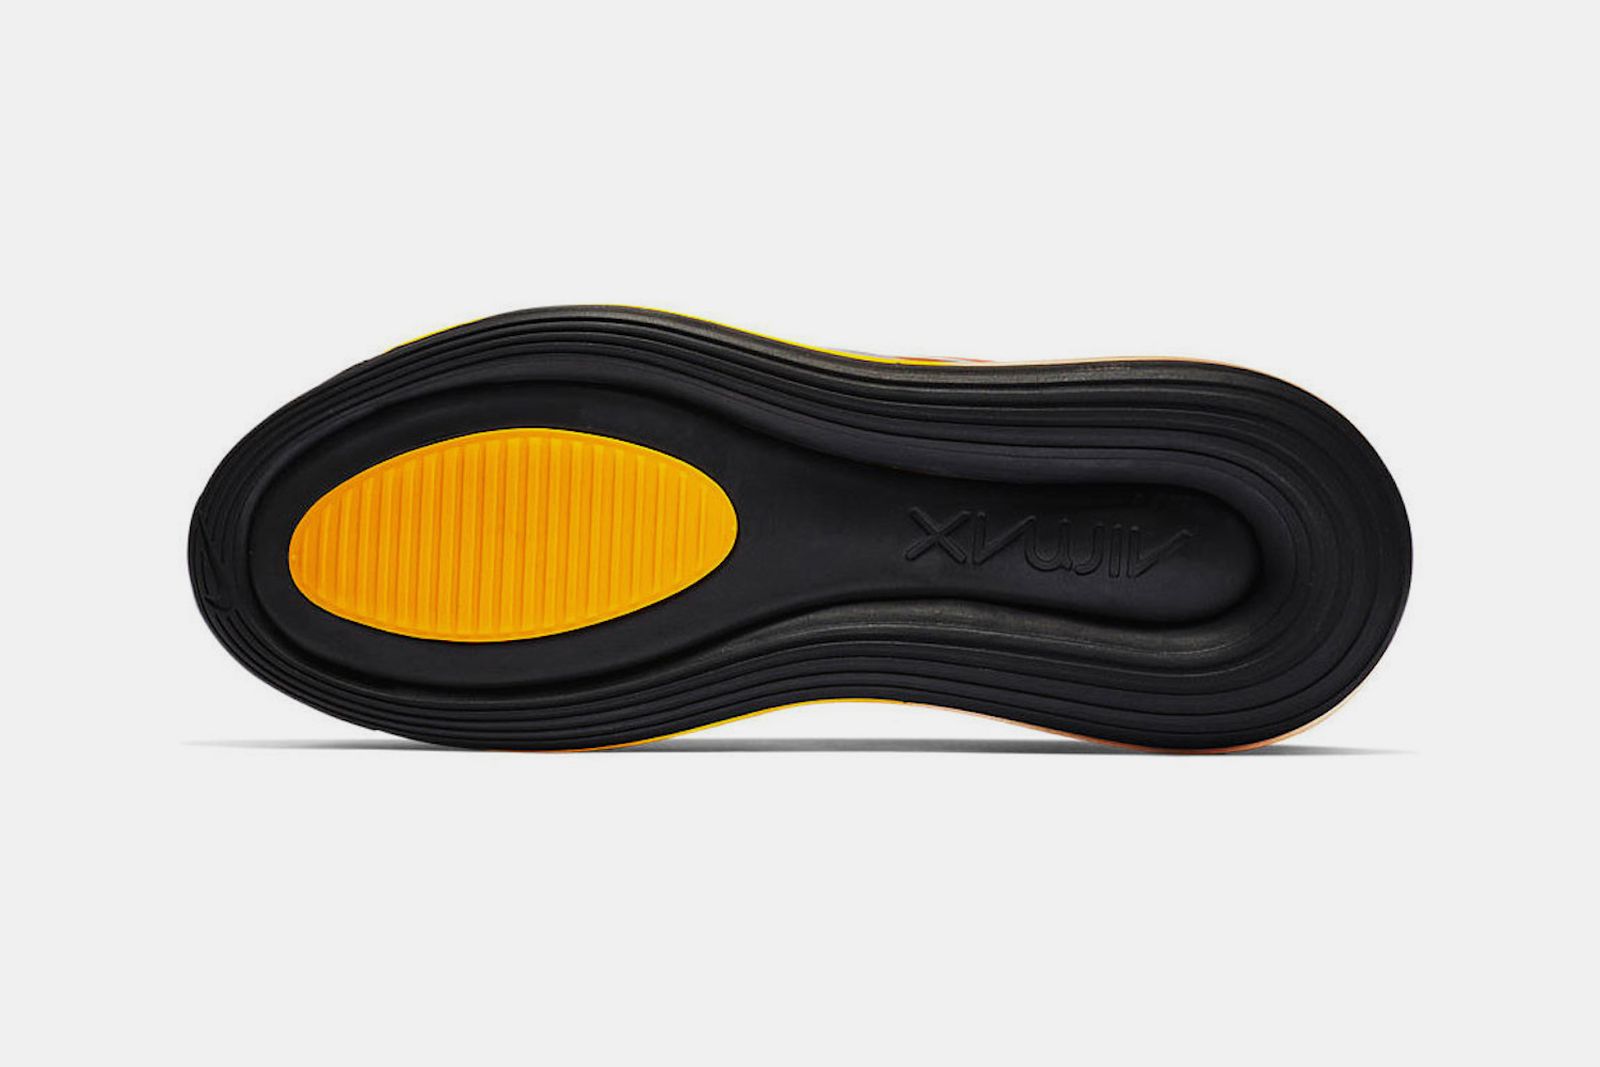 nike air max 720 2019 colorways release date price info NikePlus